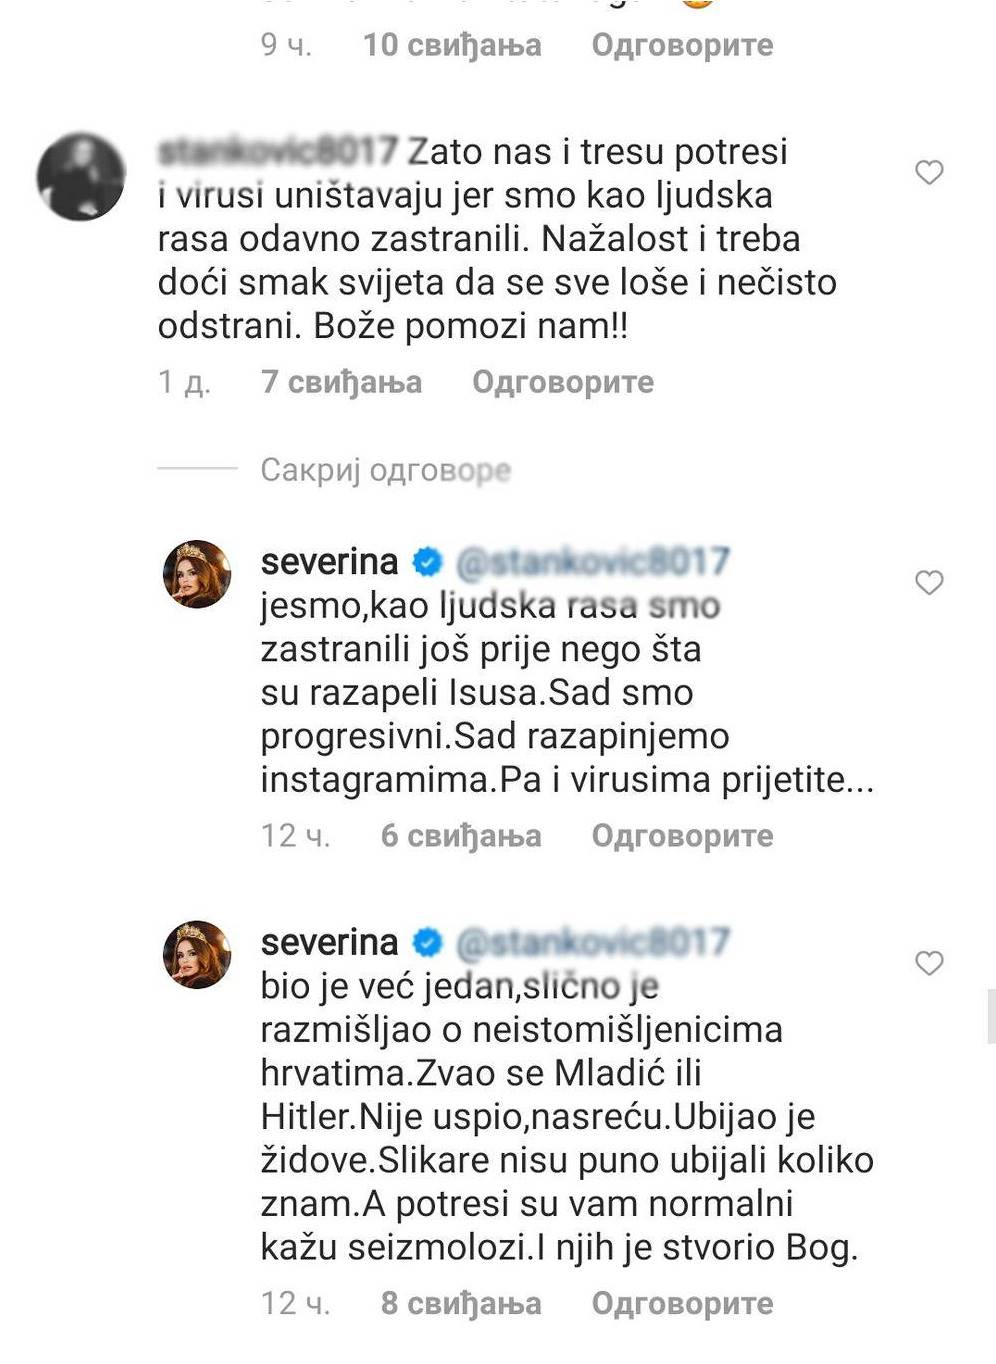  severina instagram komentari ratko mladic hitler foto 